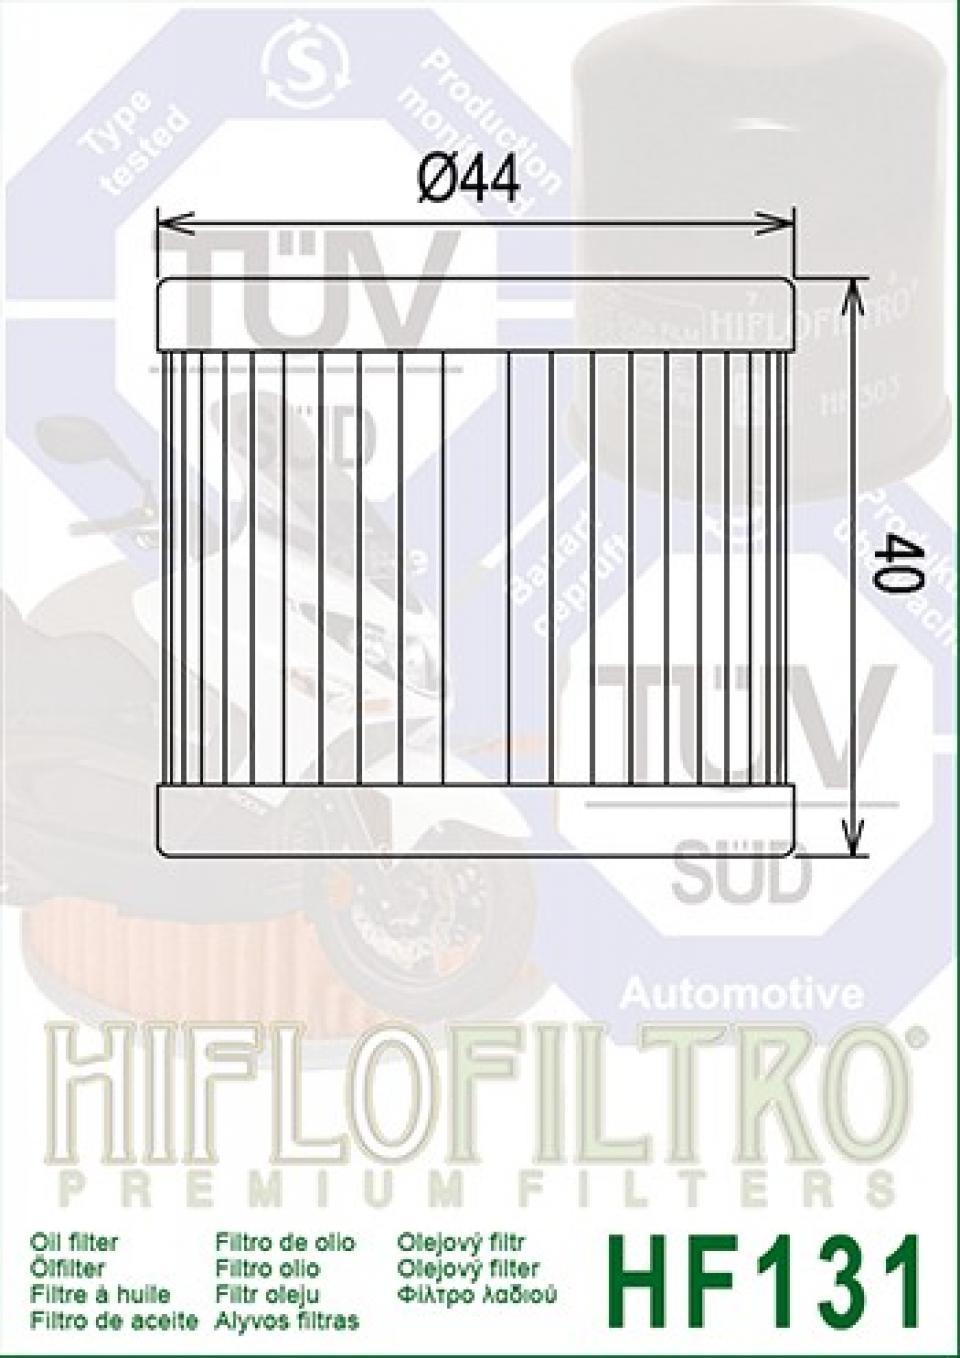 Filtre à huile Hiflofiltro pour Moto Hyosung 125 Gv Aquila 2000 à 2008 Neuf